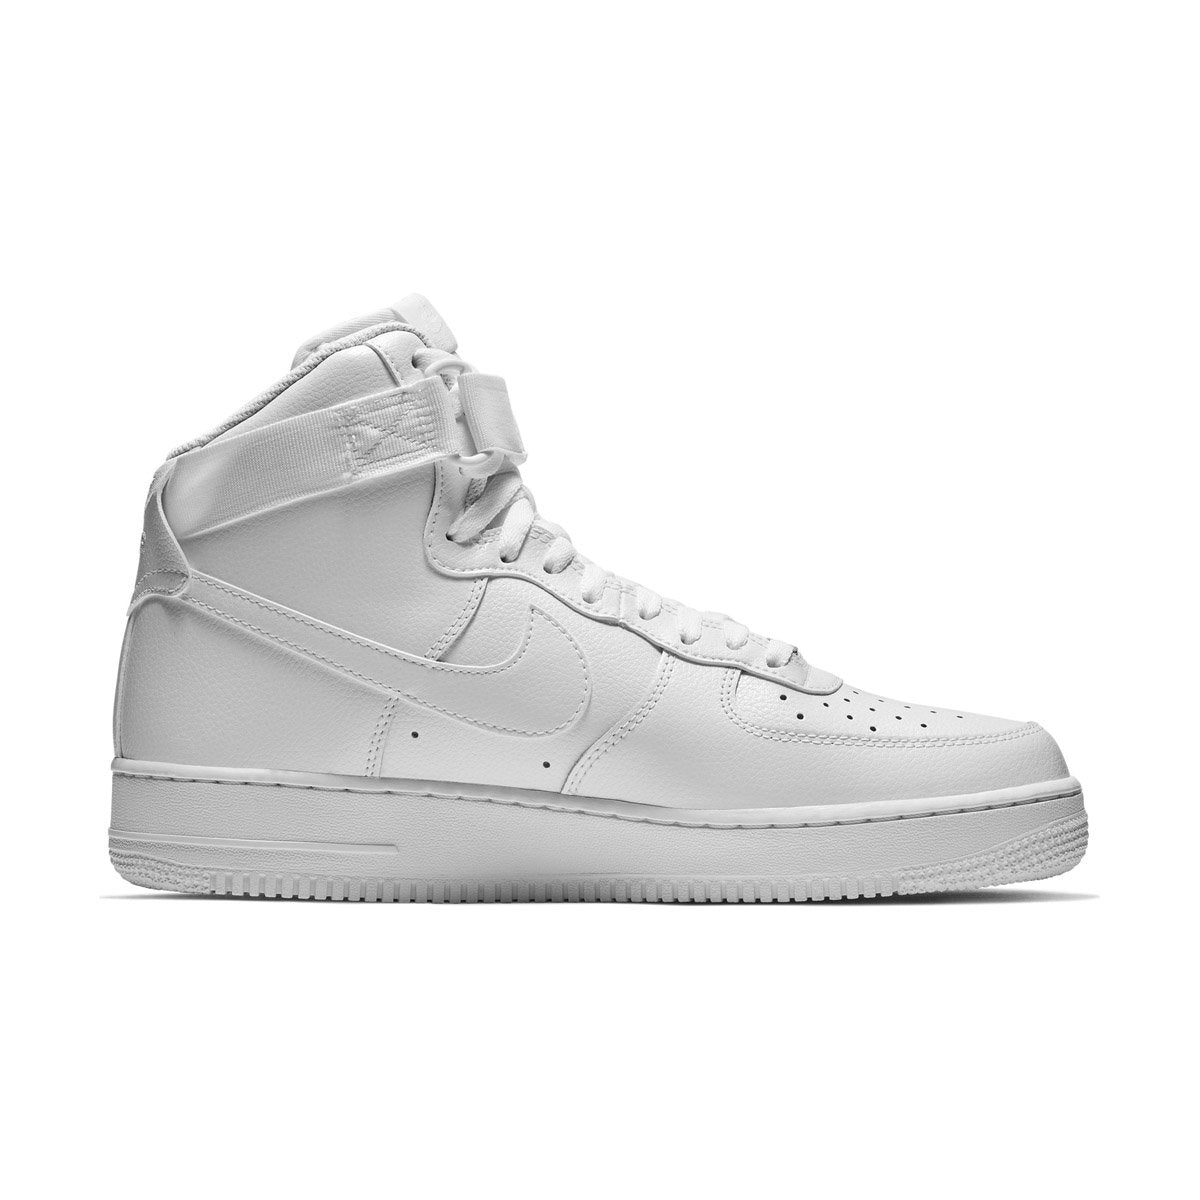  Nike Mens Air Force 1 High '07 CW2290 111 Triple White - Size  8